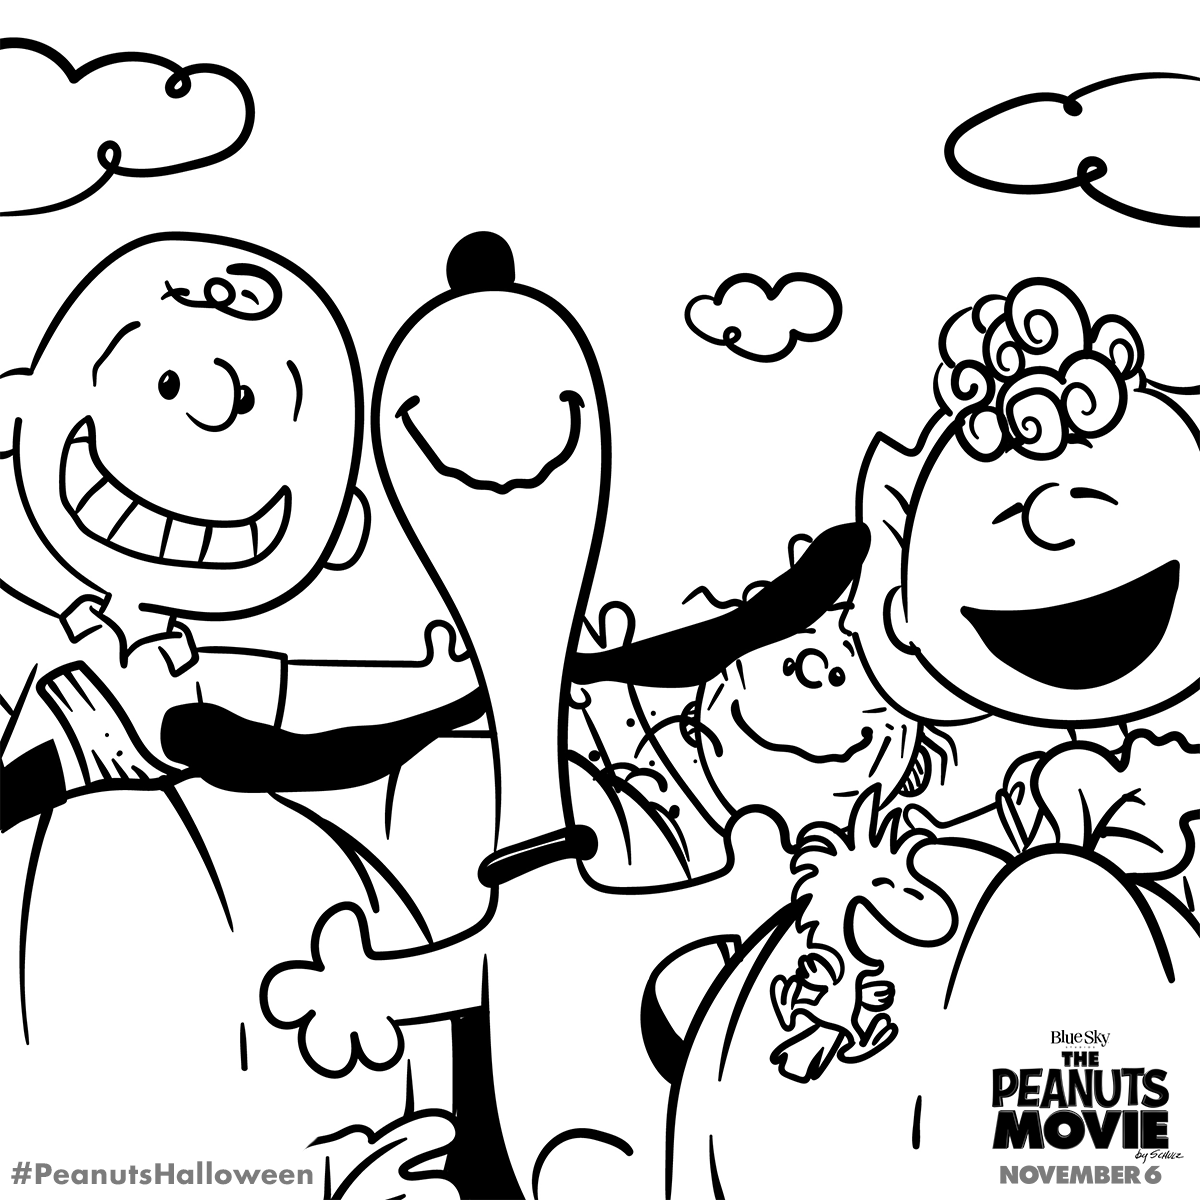 Charlie Brown Halloween Coloring Pages at GetDrawings Free download